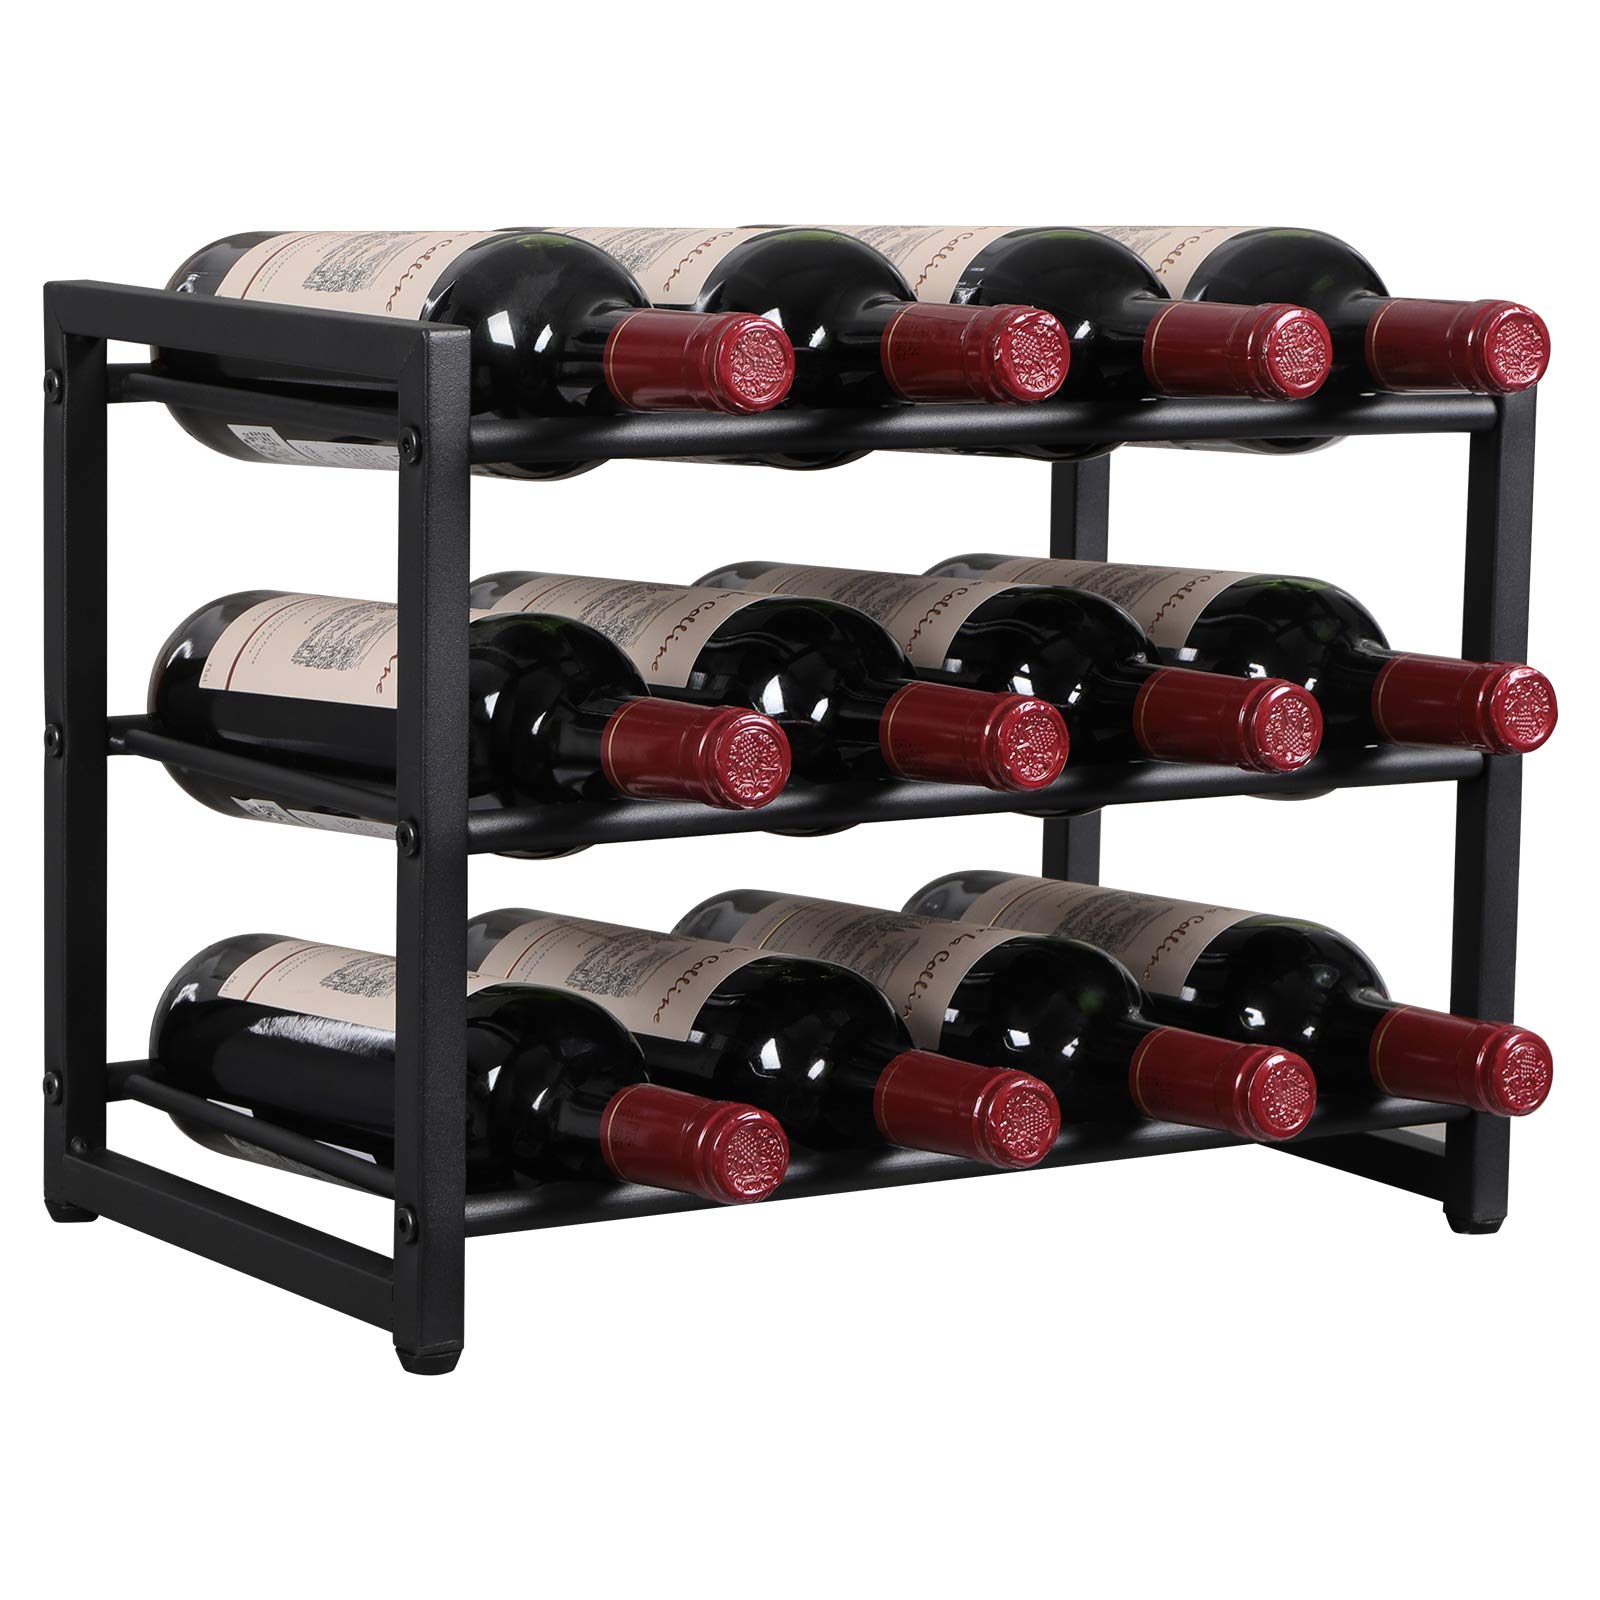 OROPY 12-Bottle Wine Rack